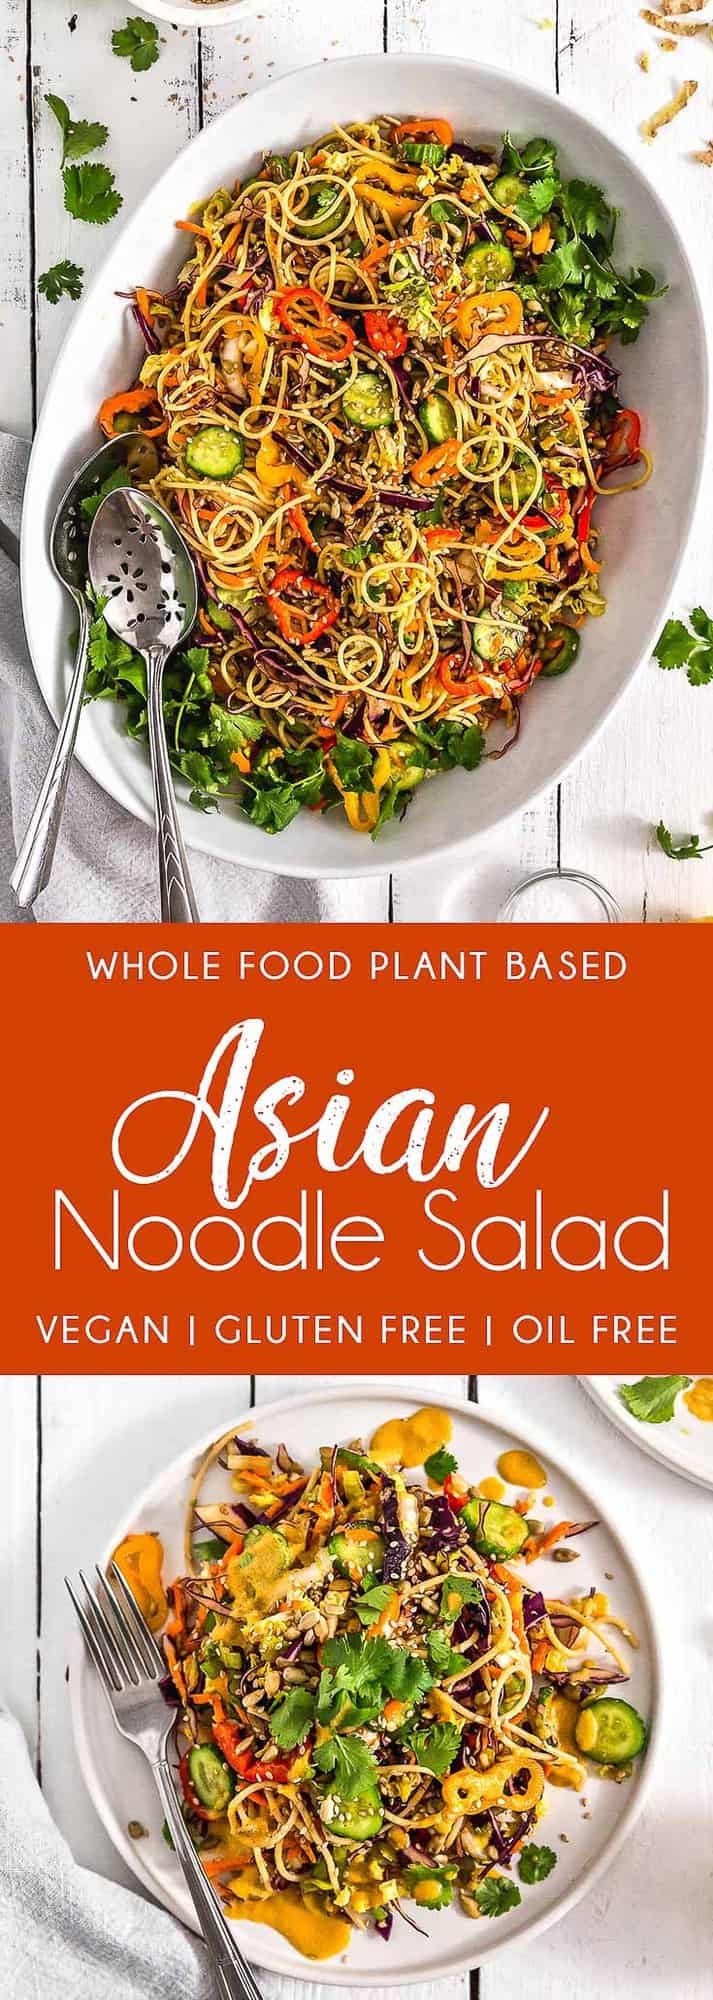 Asian Noodle Salad, noodle salad, plant based, vegan, vegetarian, whole food plant based, gluten free, recipe, wfpb, healthy, healthy vegan, oil free, no refined sugar, no oil, refined sugar free, dairy free, salad, noodles, pasta